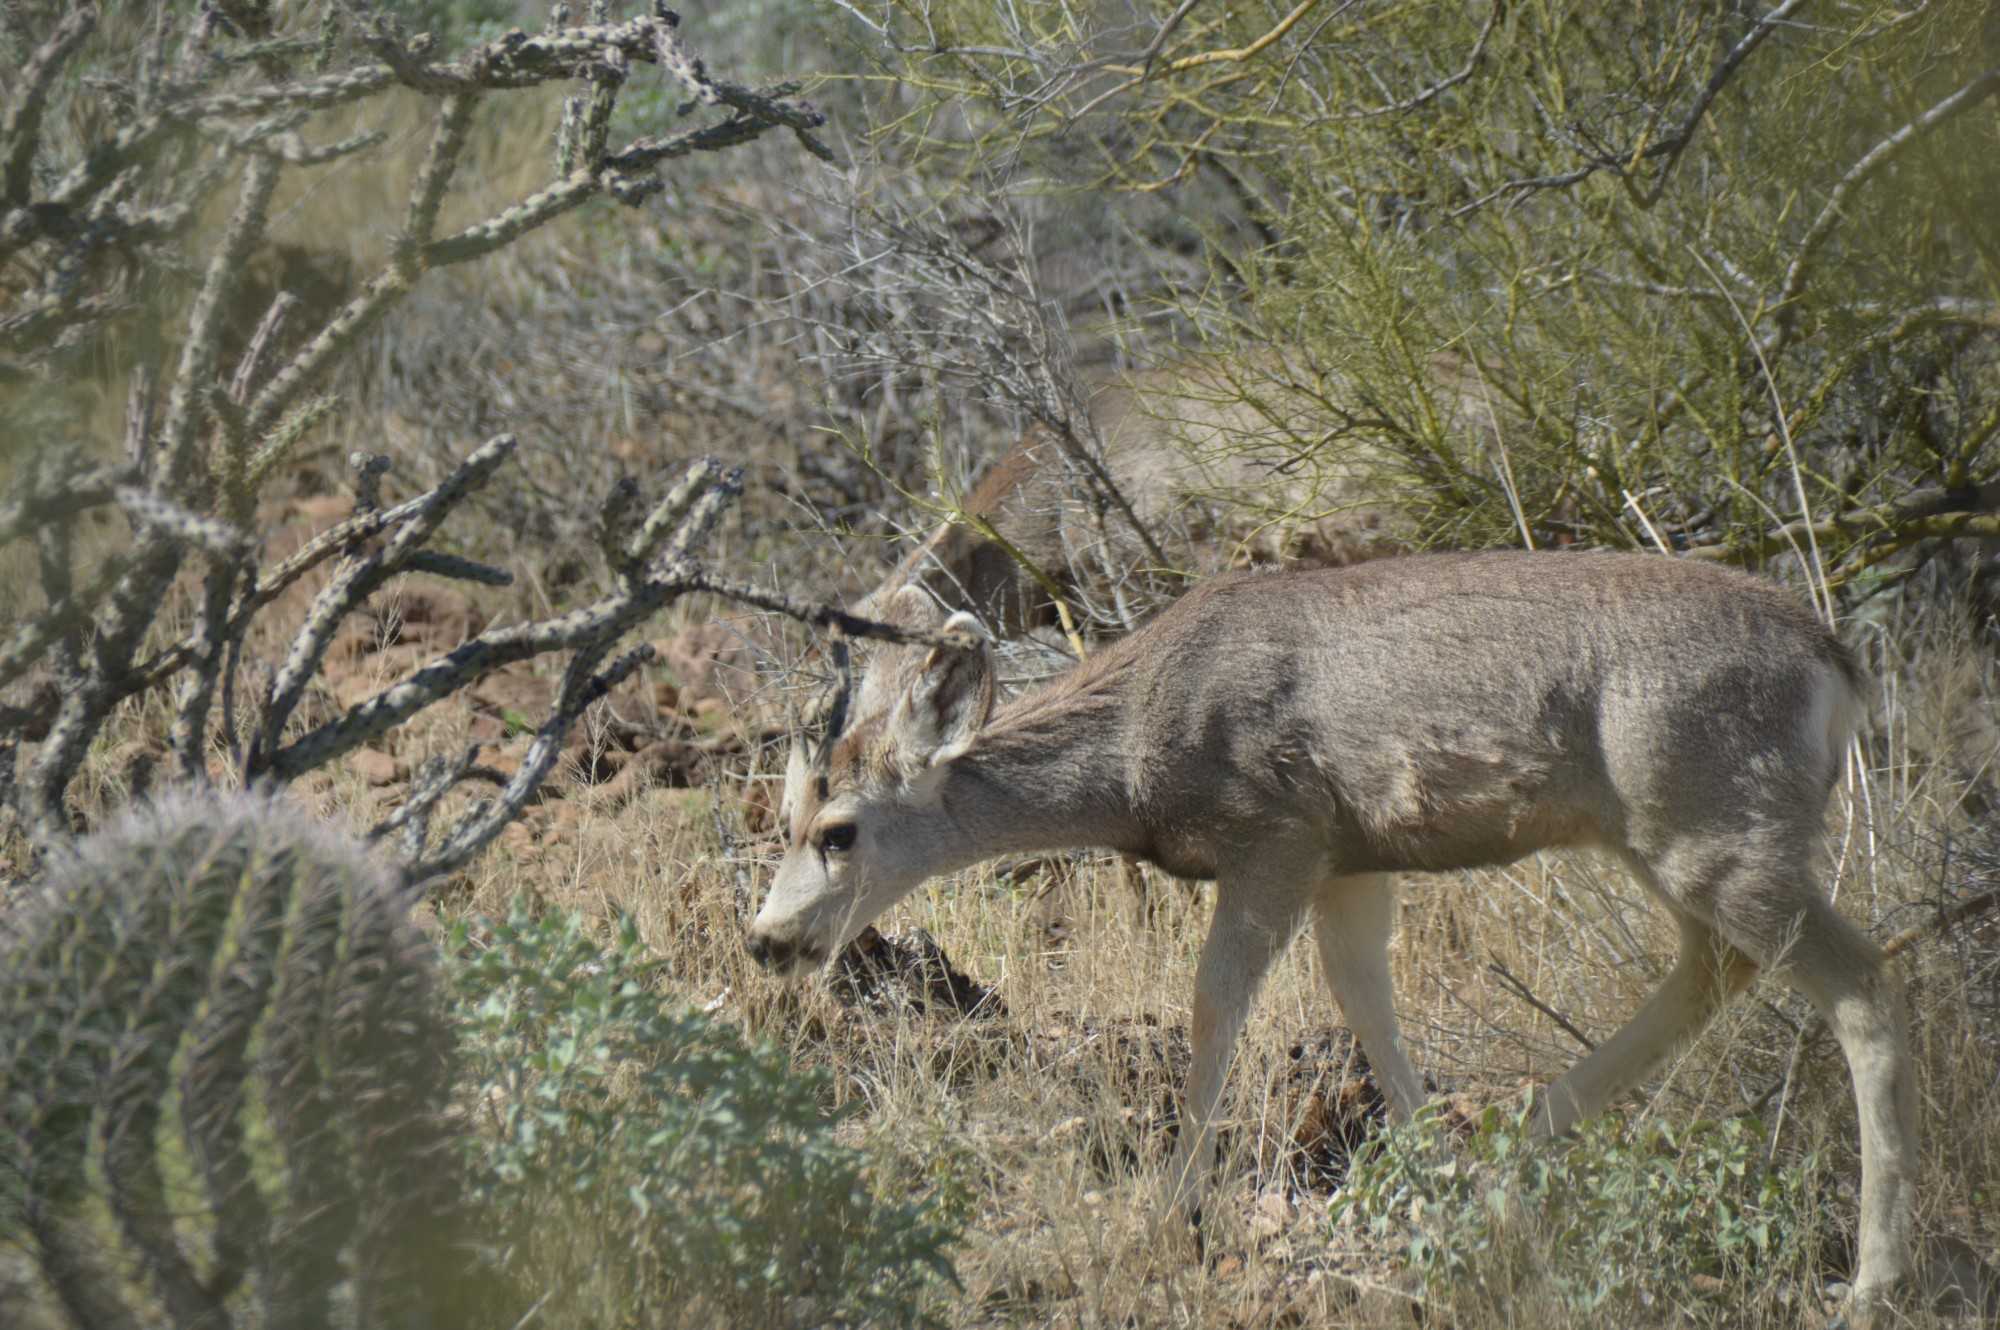 A deer on the Tumamoc Hill trail on Feb. 25. Hikers can enjoy various wildlife along their walk. (Photo by Ileana Hubert, El Inde Arizona)